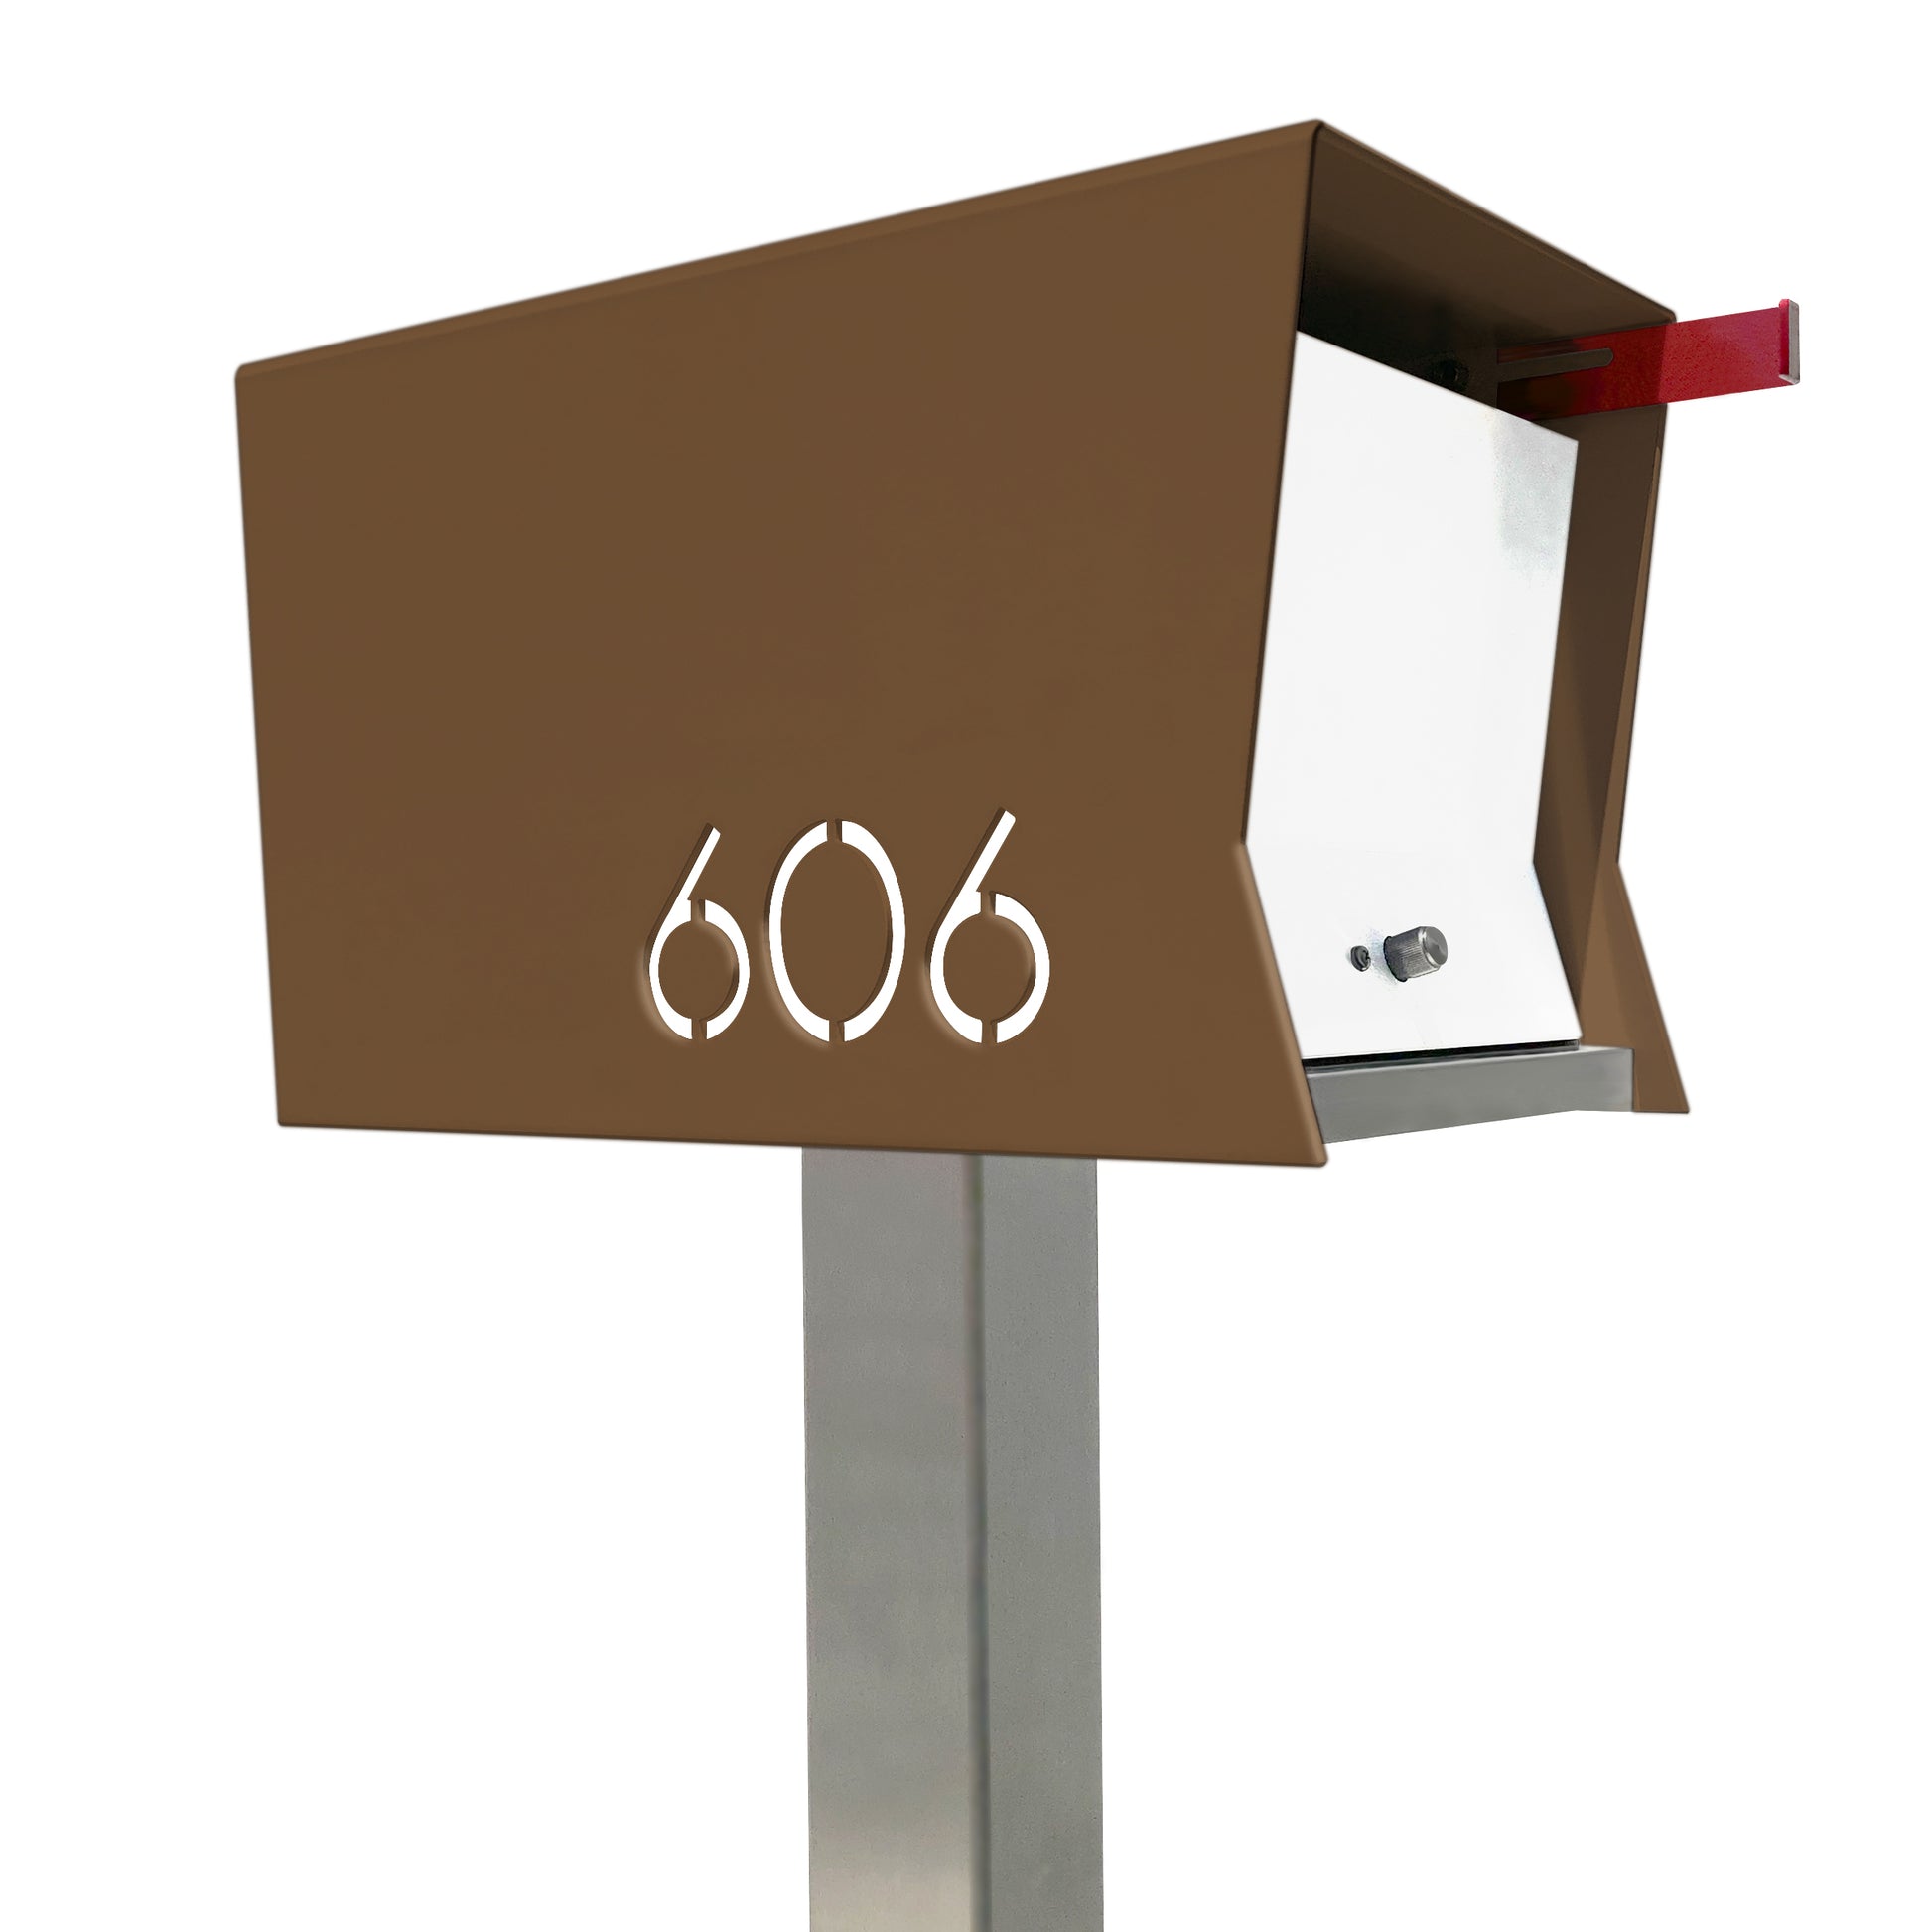 The Original Retrobox in COCONUT - Modern Mailbox brown and white